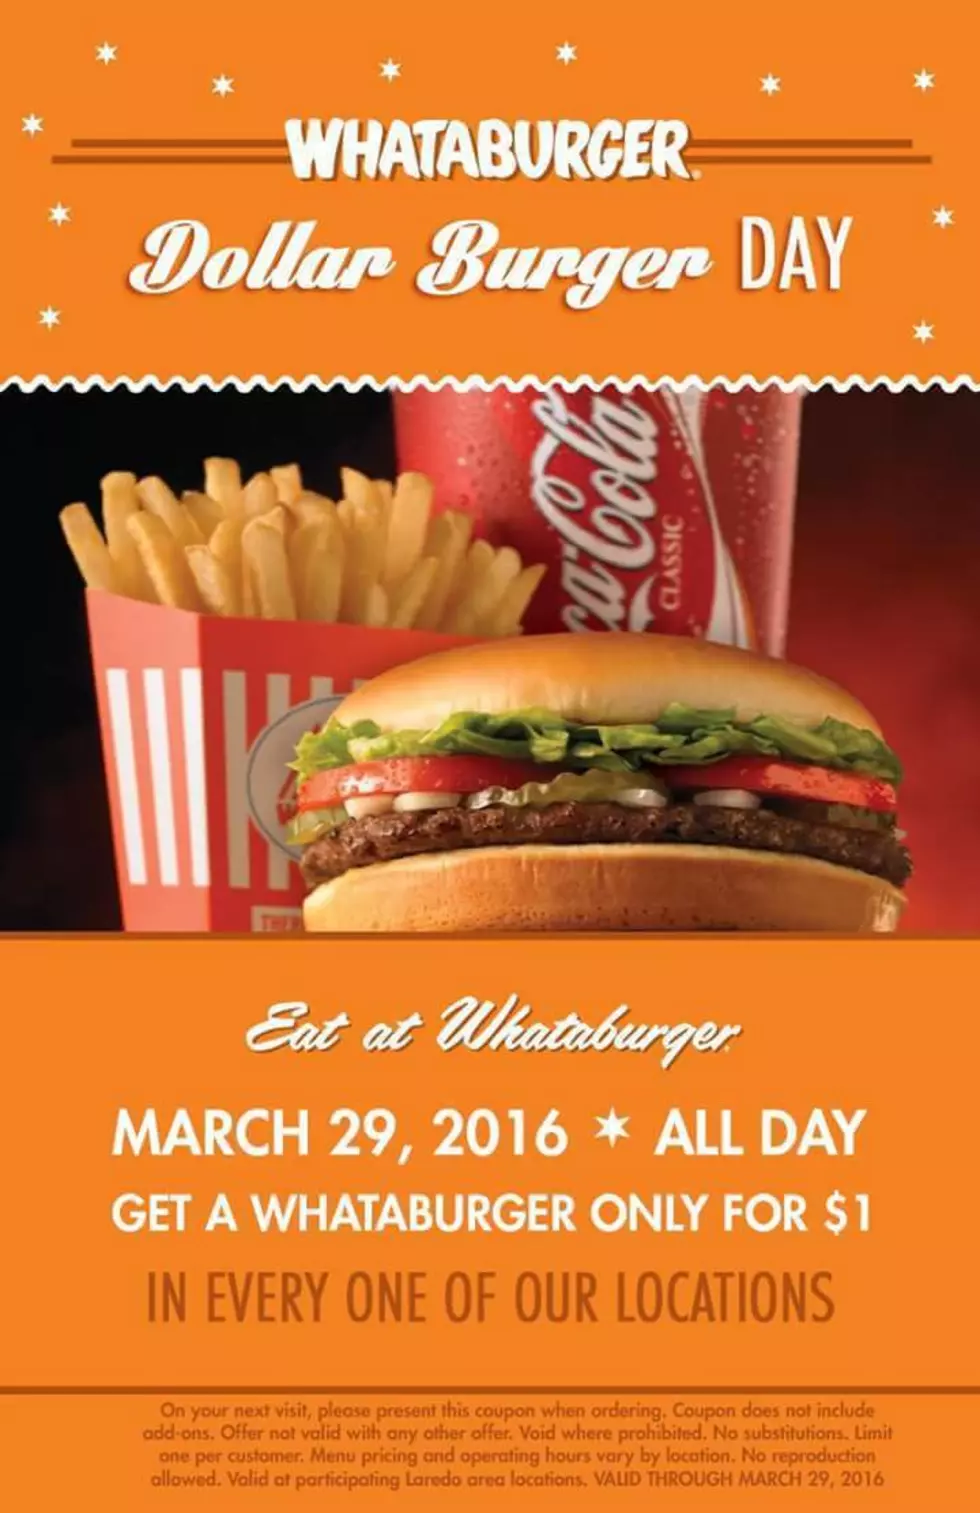 Fake Facebook Post About Whataburger &#8216;Dollar Burger Day&#8217;